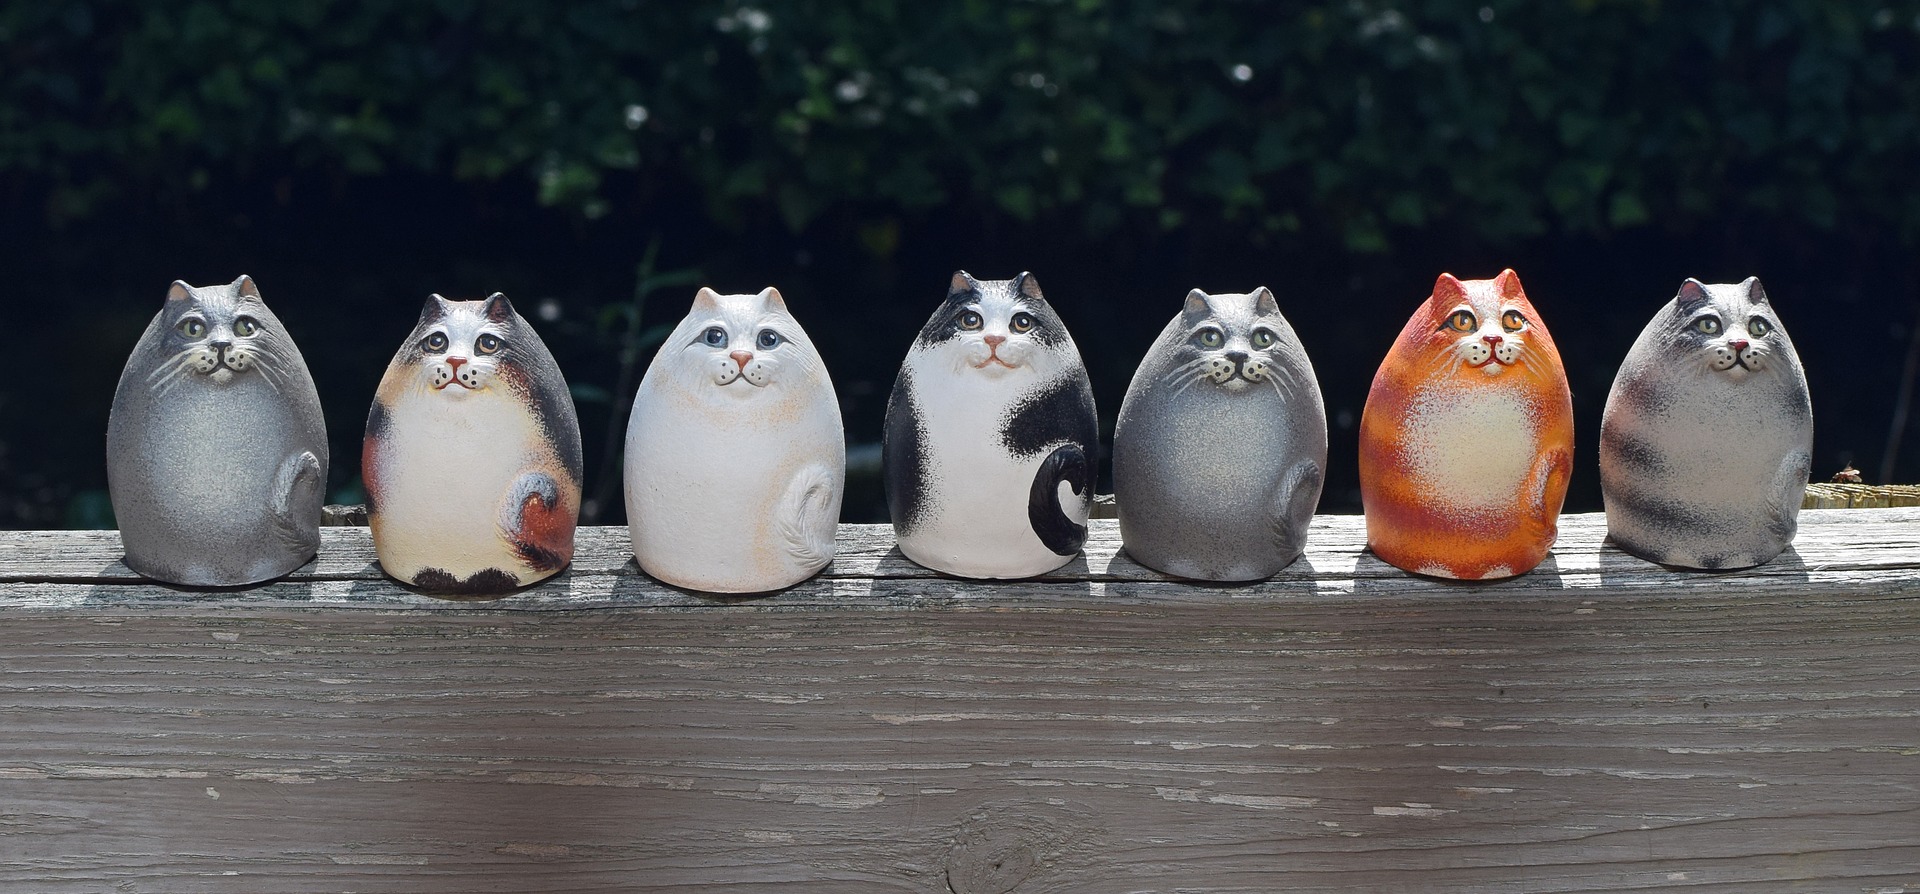 Selling crafts - ceramic cats